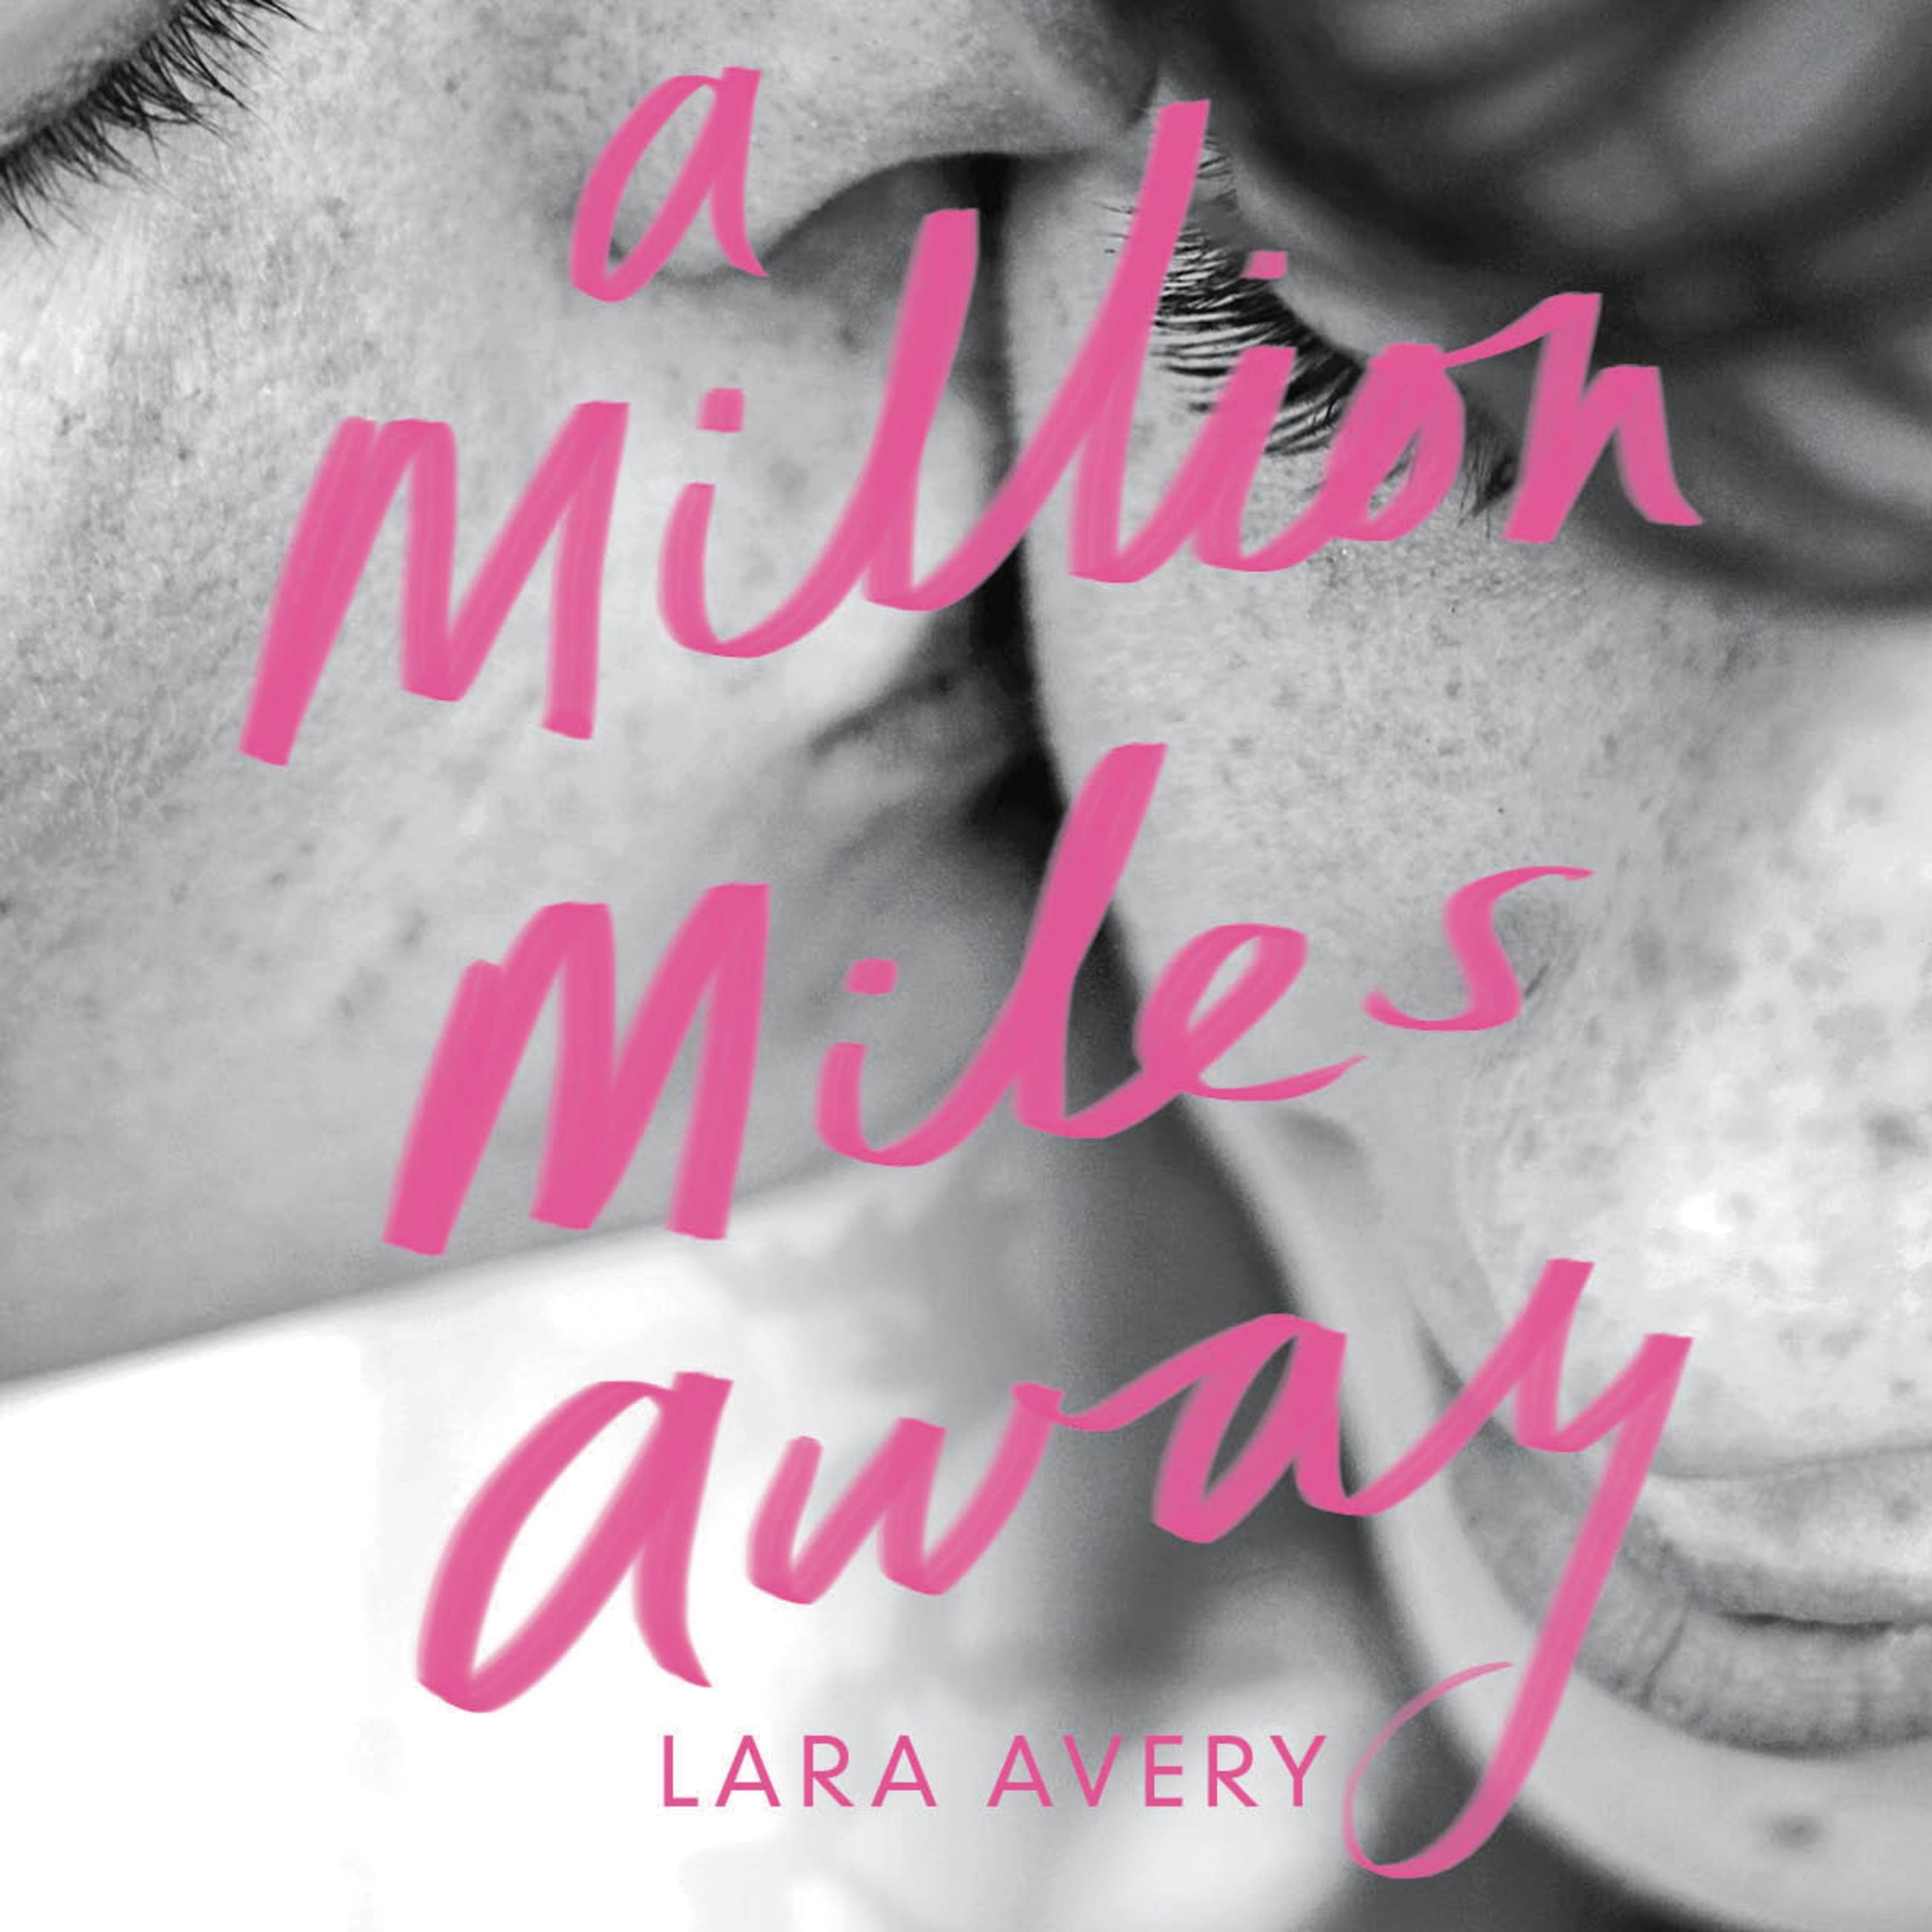 A million miles away. Million Miles away. A million Miles away на русском. Avery Lara "Memory book". Saul a million Miles.